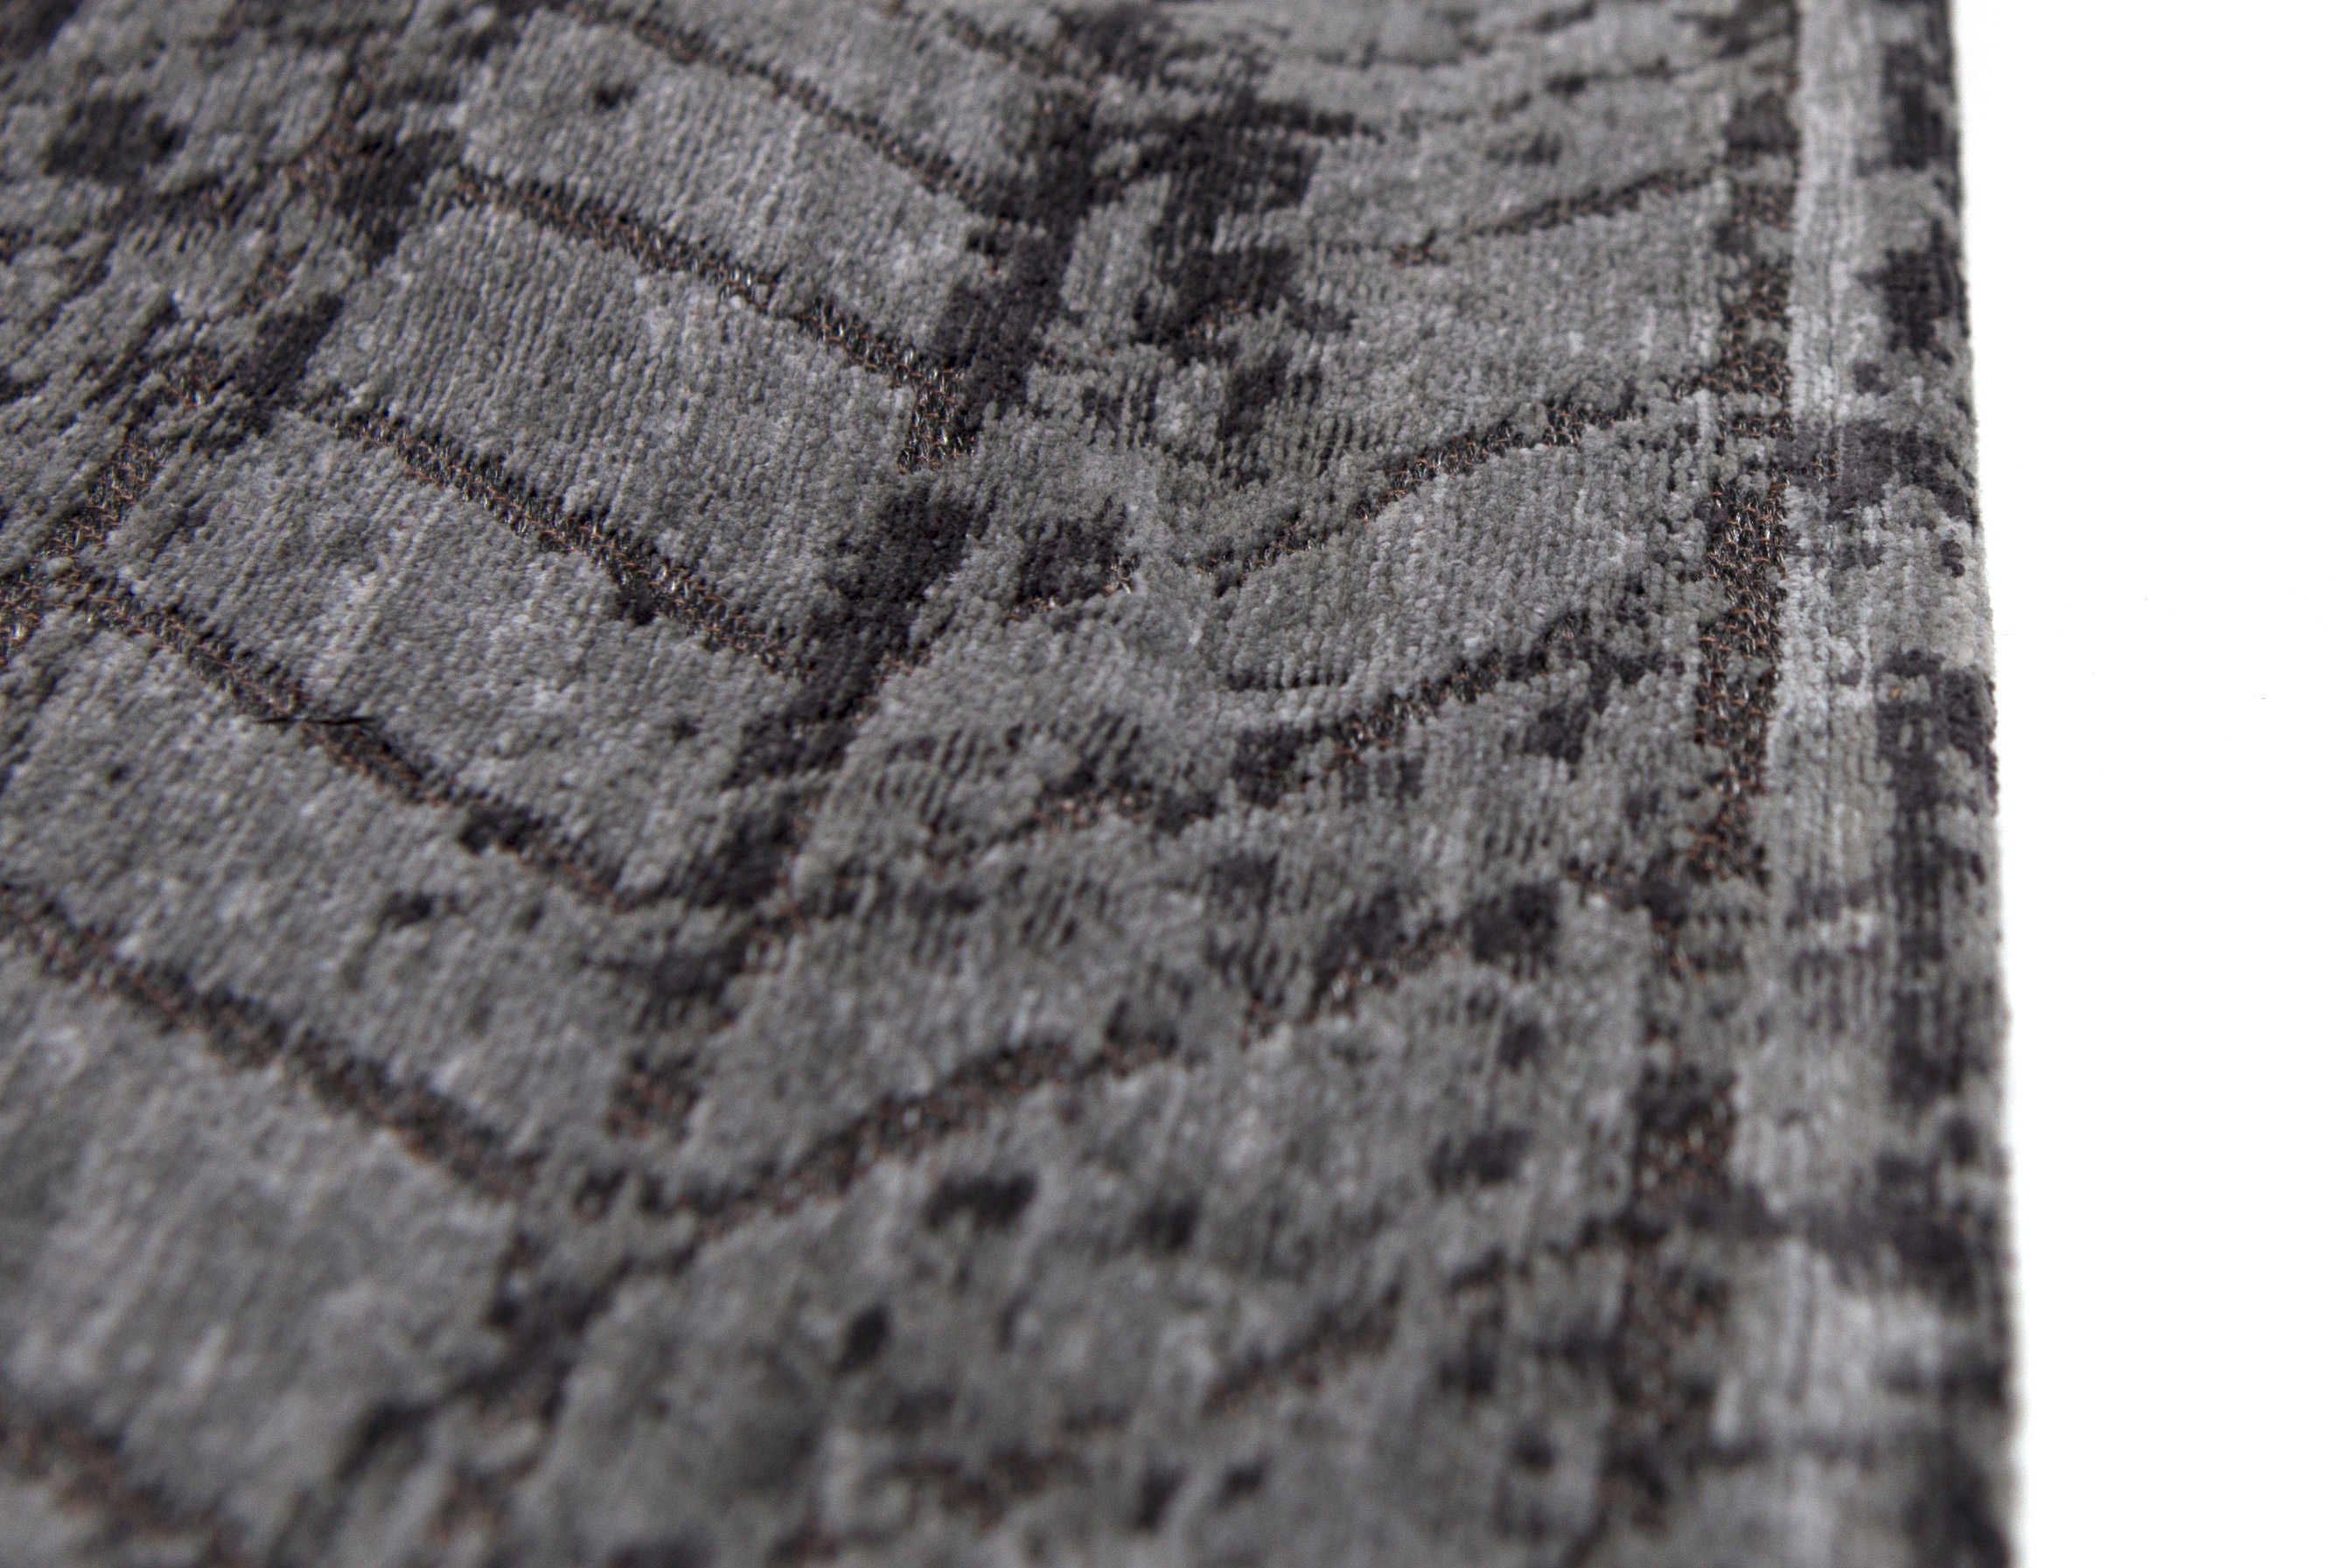 Black flatweave rug with faded grey chevron pattern